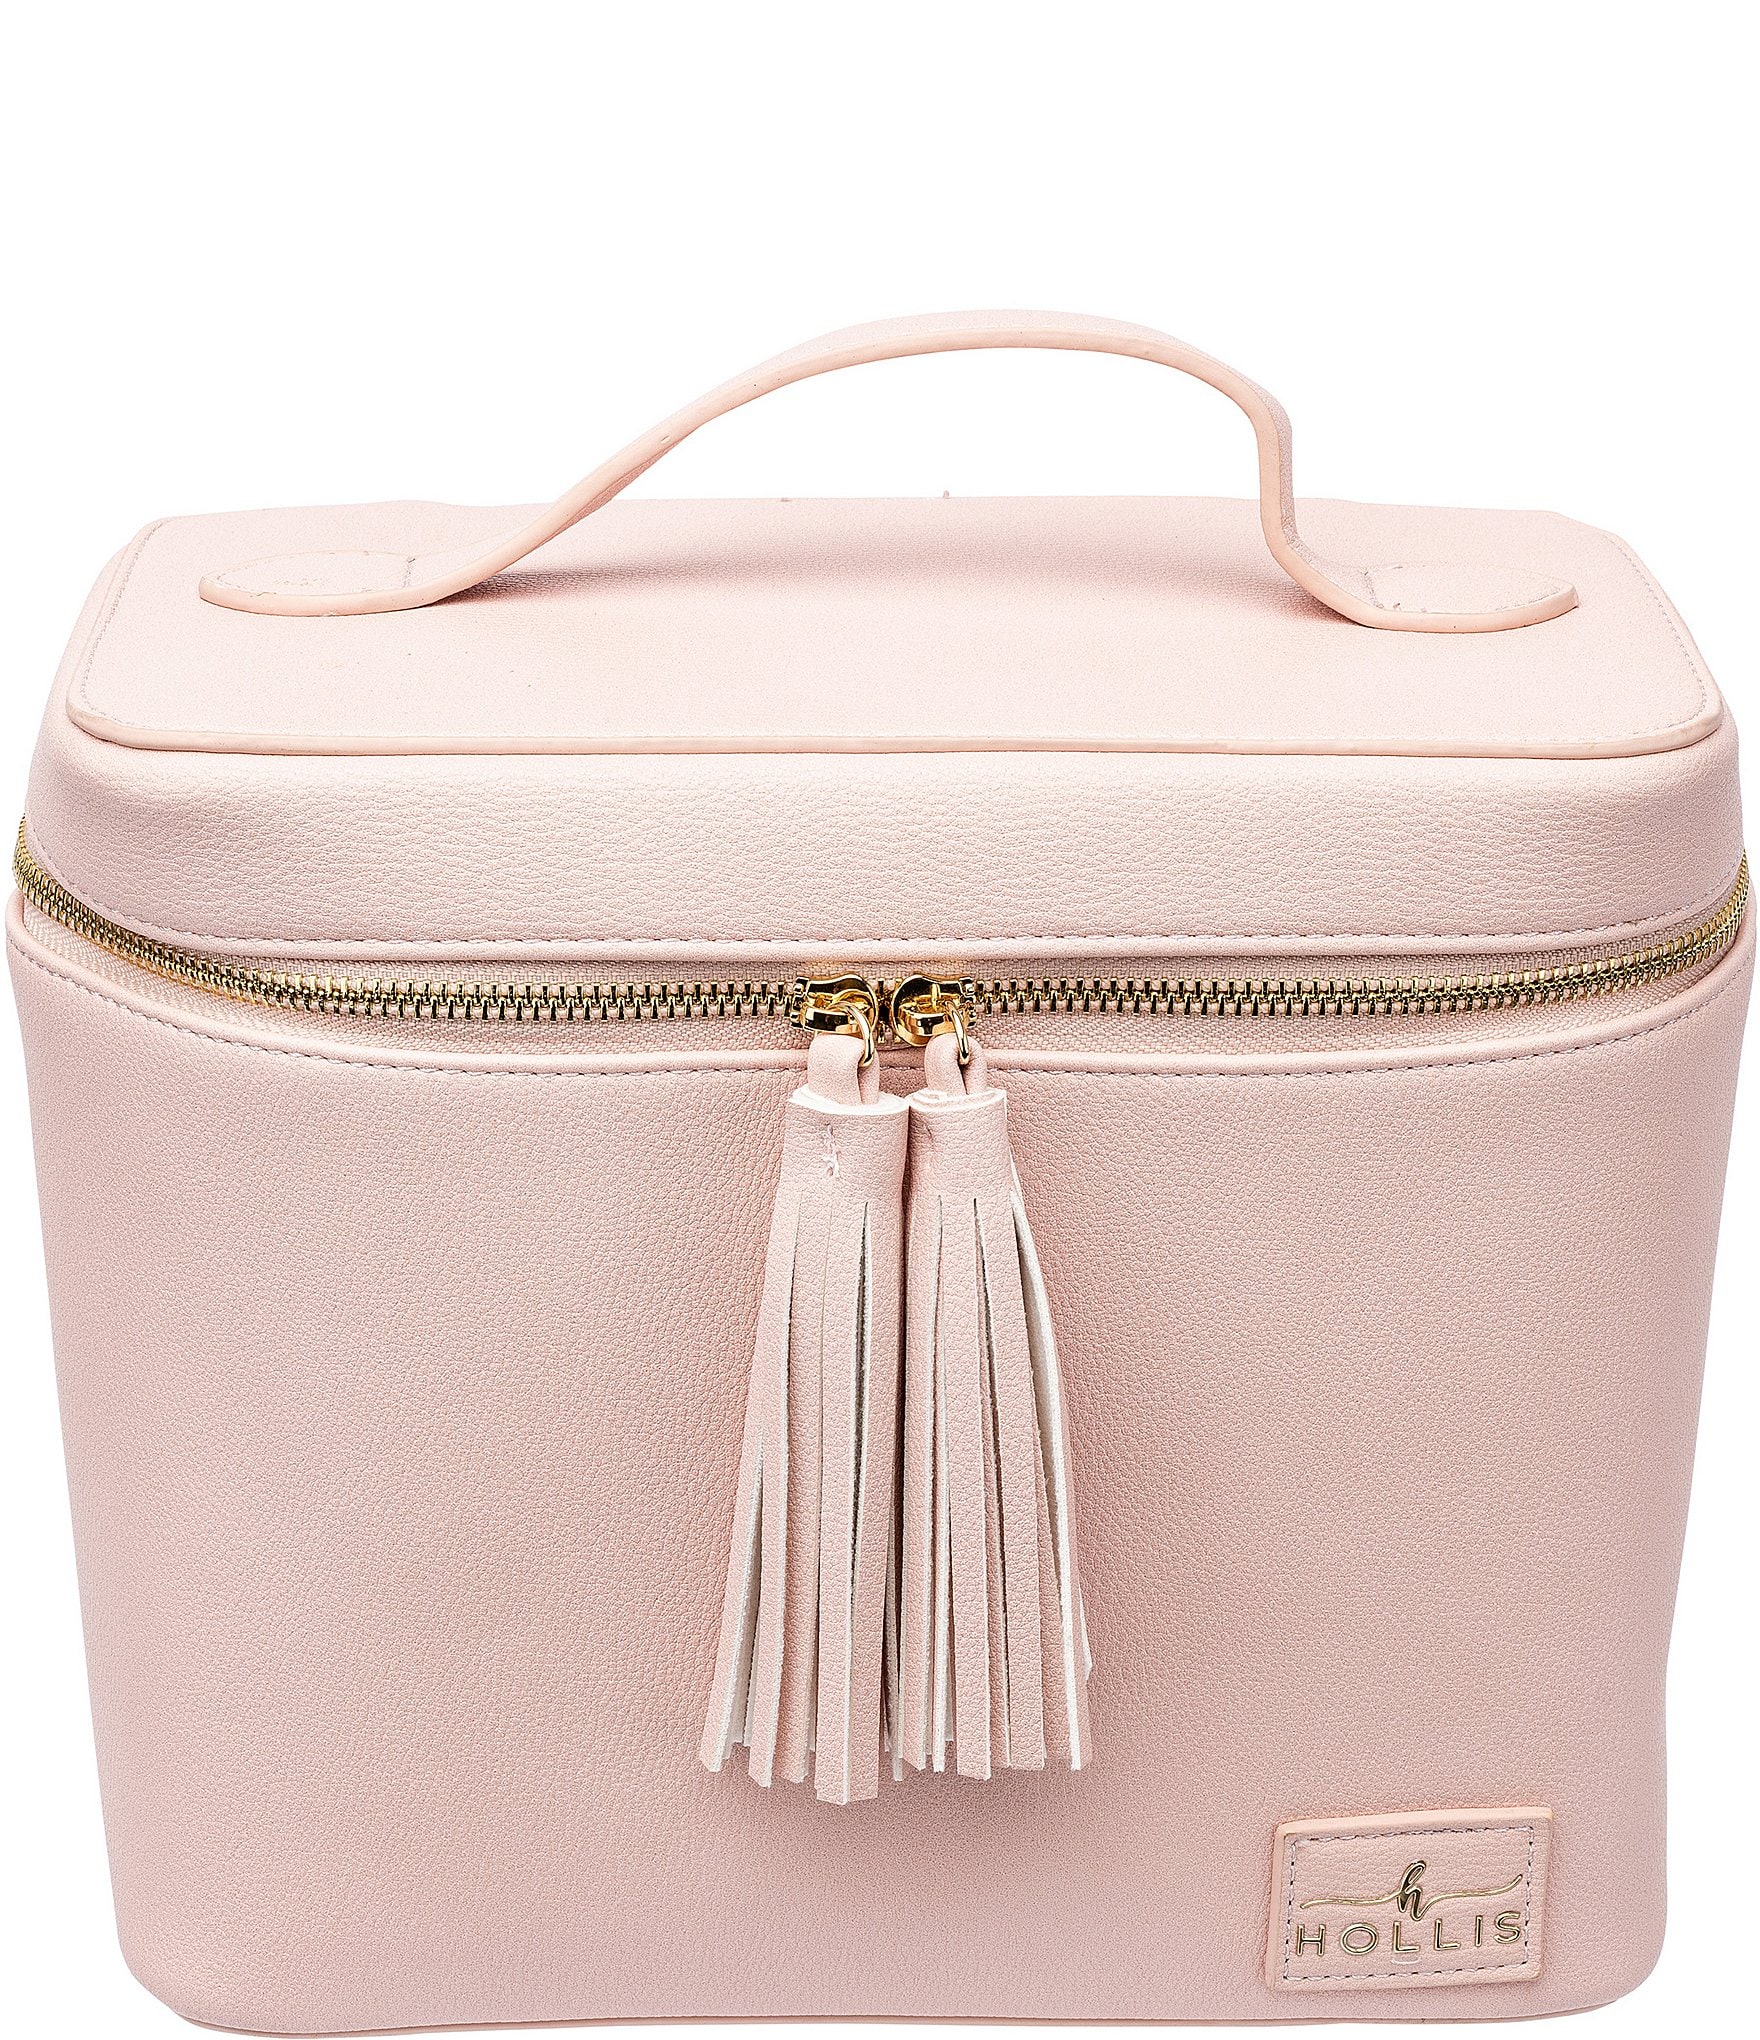 Hollis Luxury Bags – Michele Jewelry